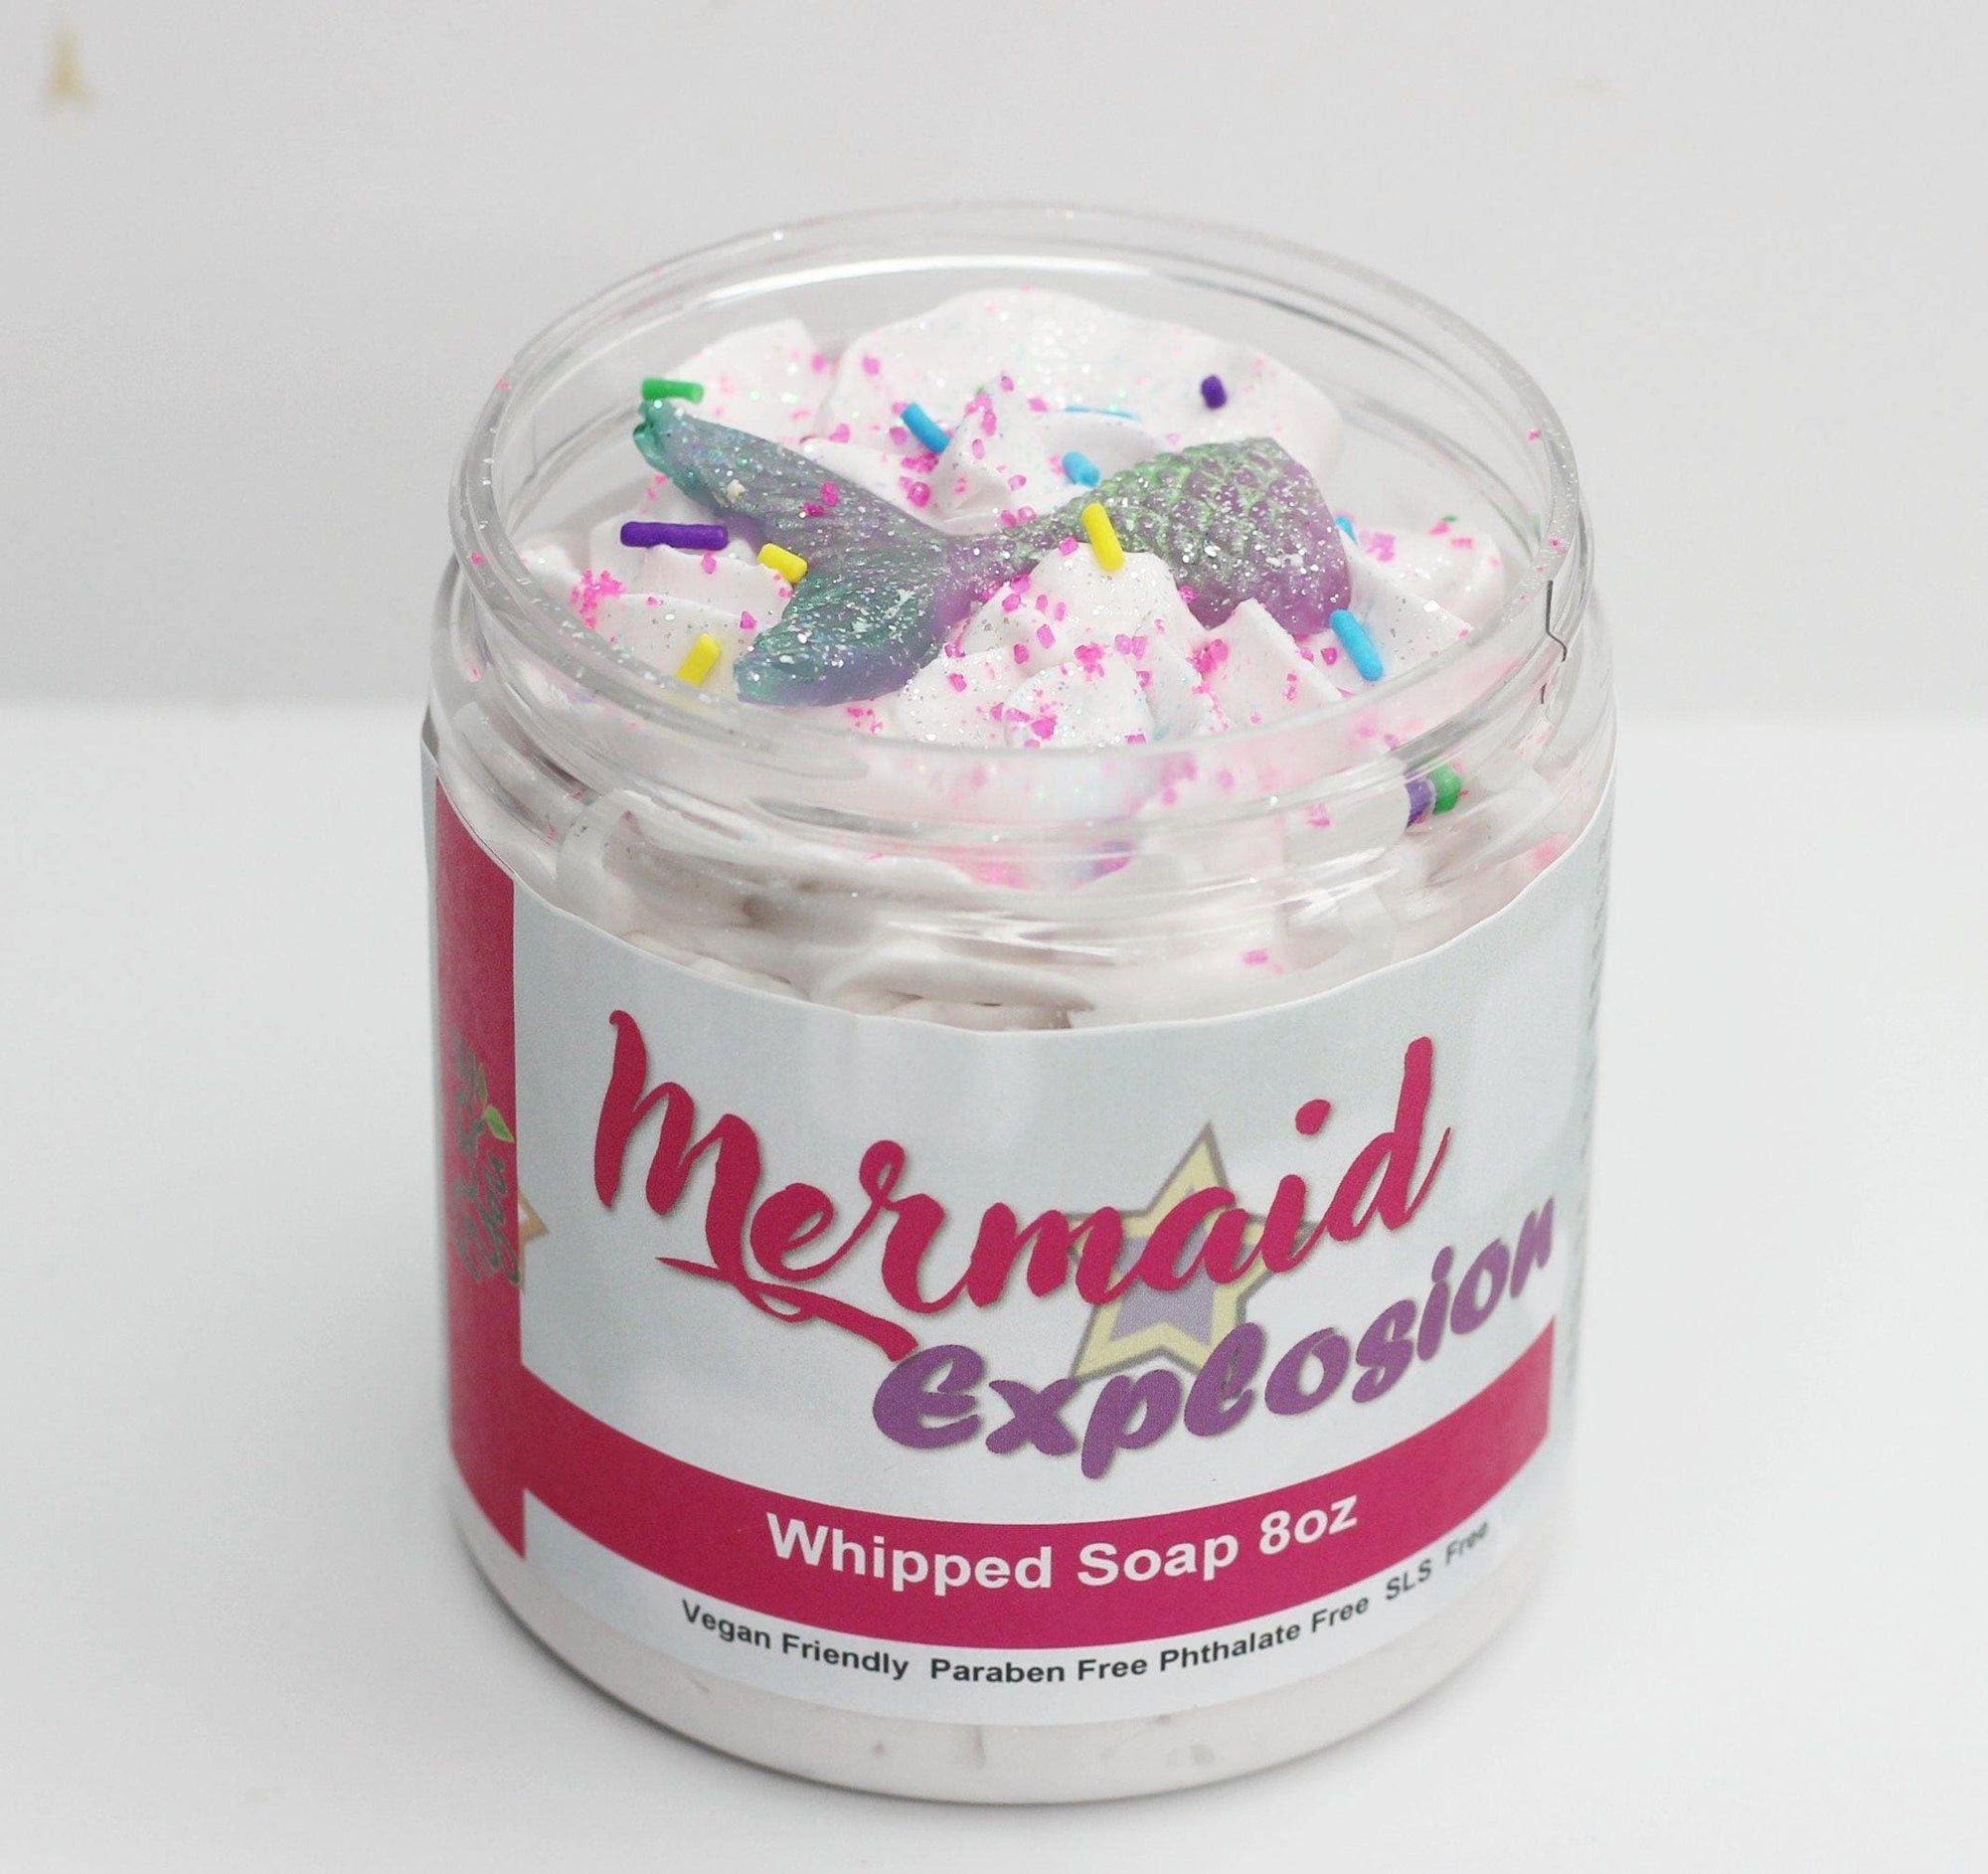 Mermaid Explosion Whipped Soap - PureYou Handmade